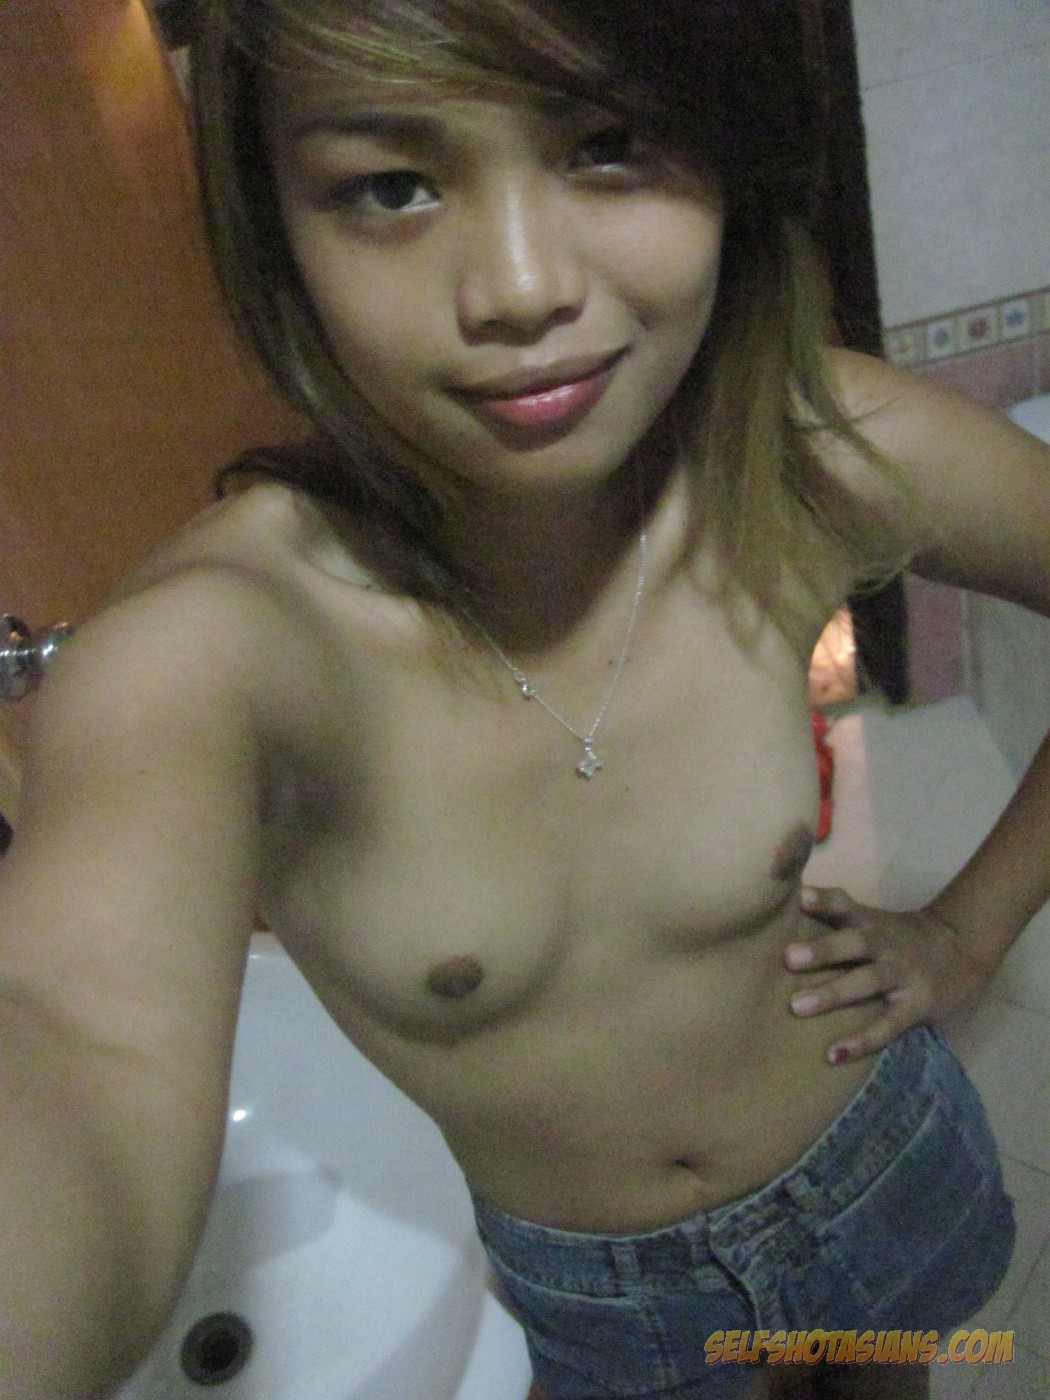 Filipina girls nude teen These Photos